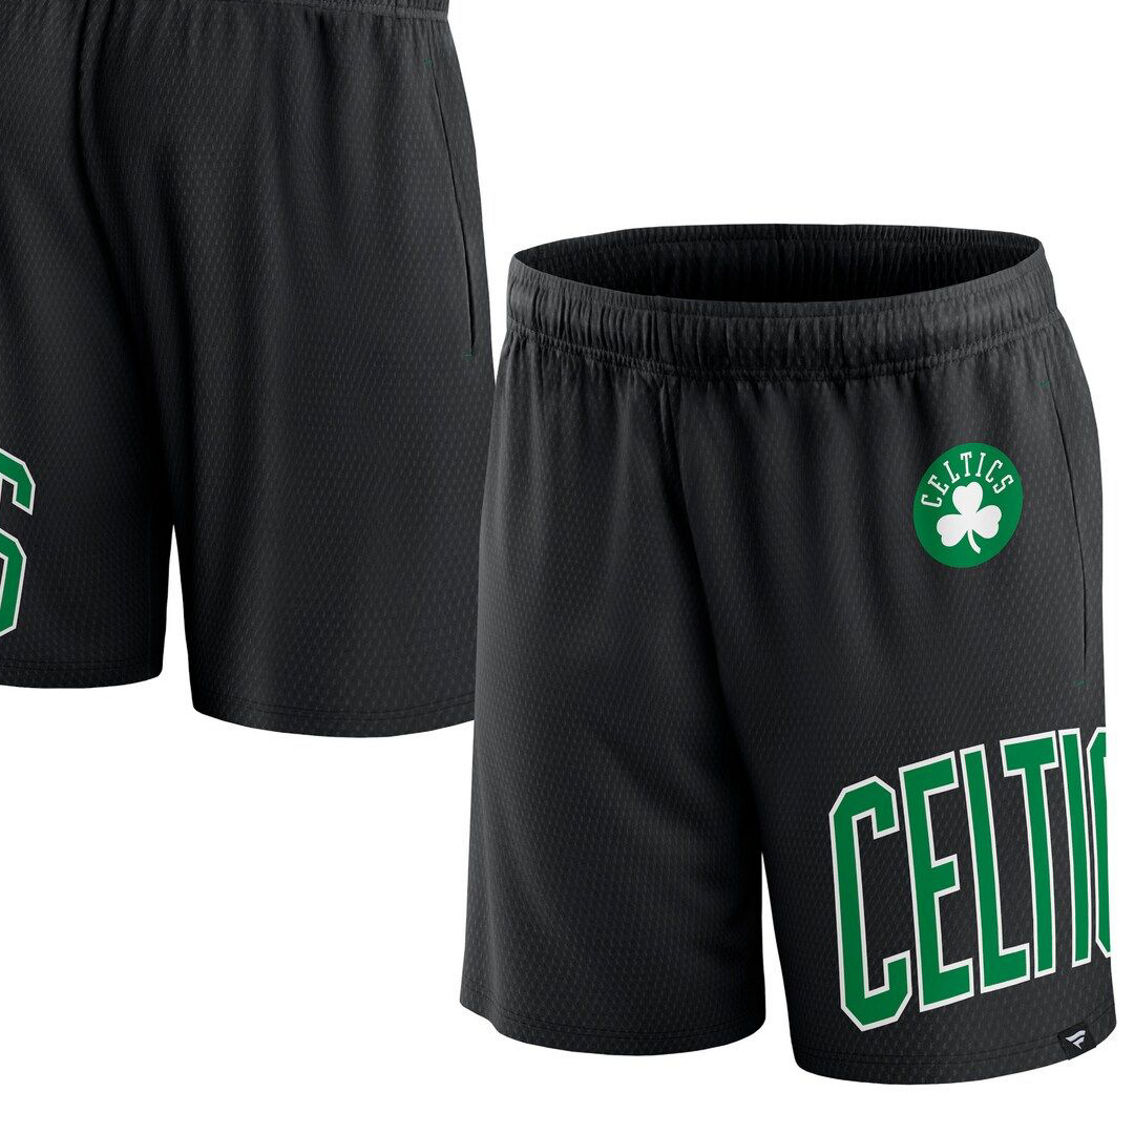 Fanatics Branded Men's Black Boston Celtics Free Throw Mesh Shorts - Image 2 of 4